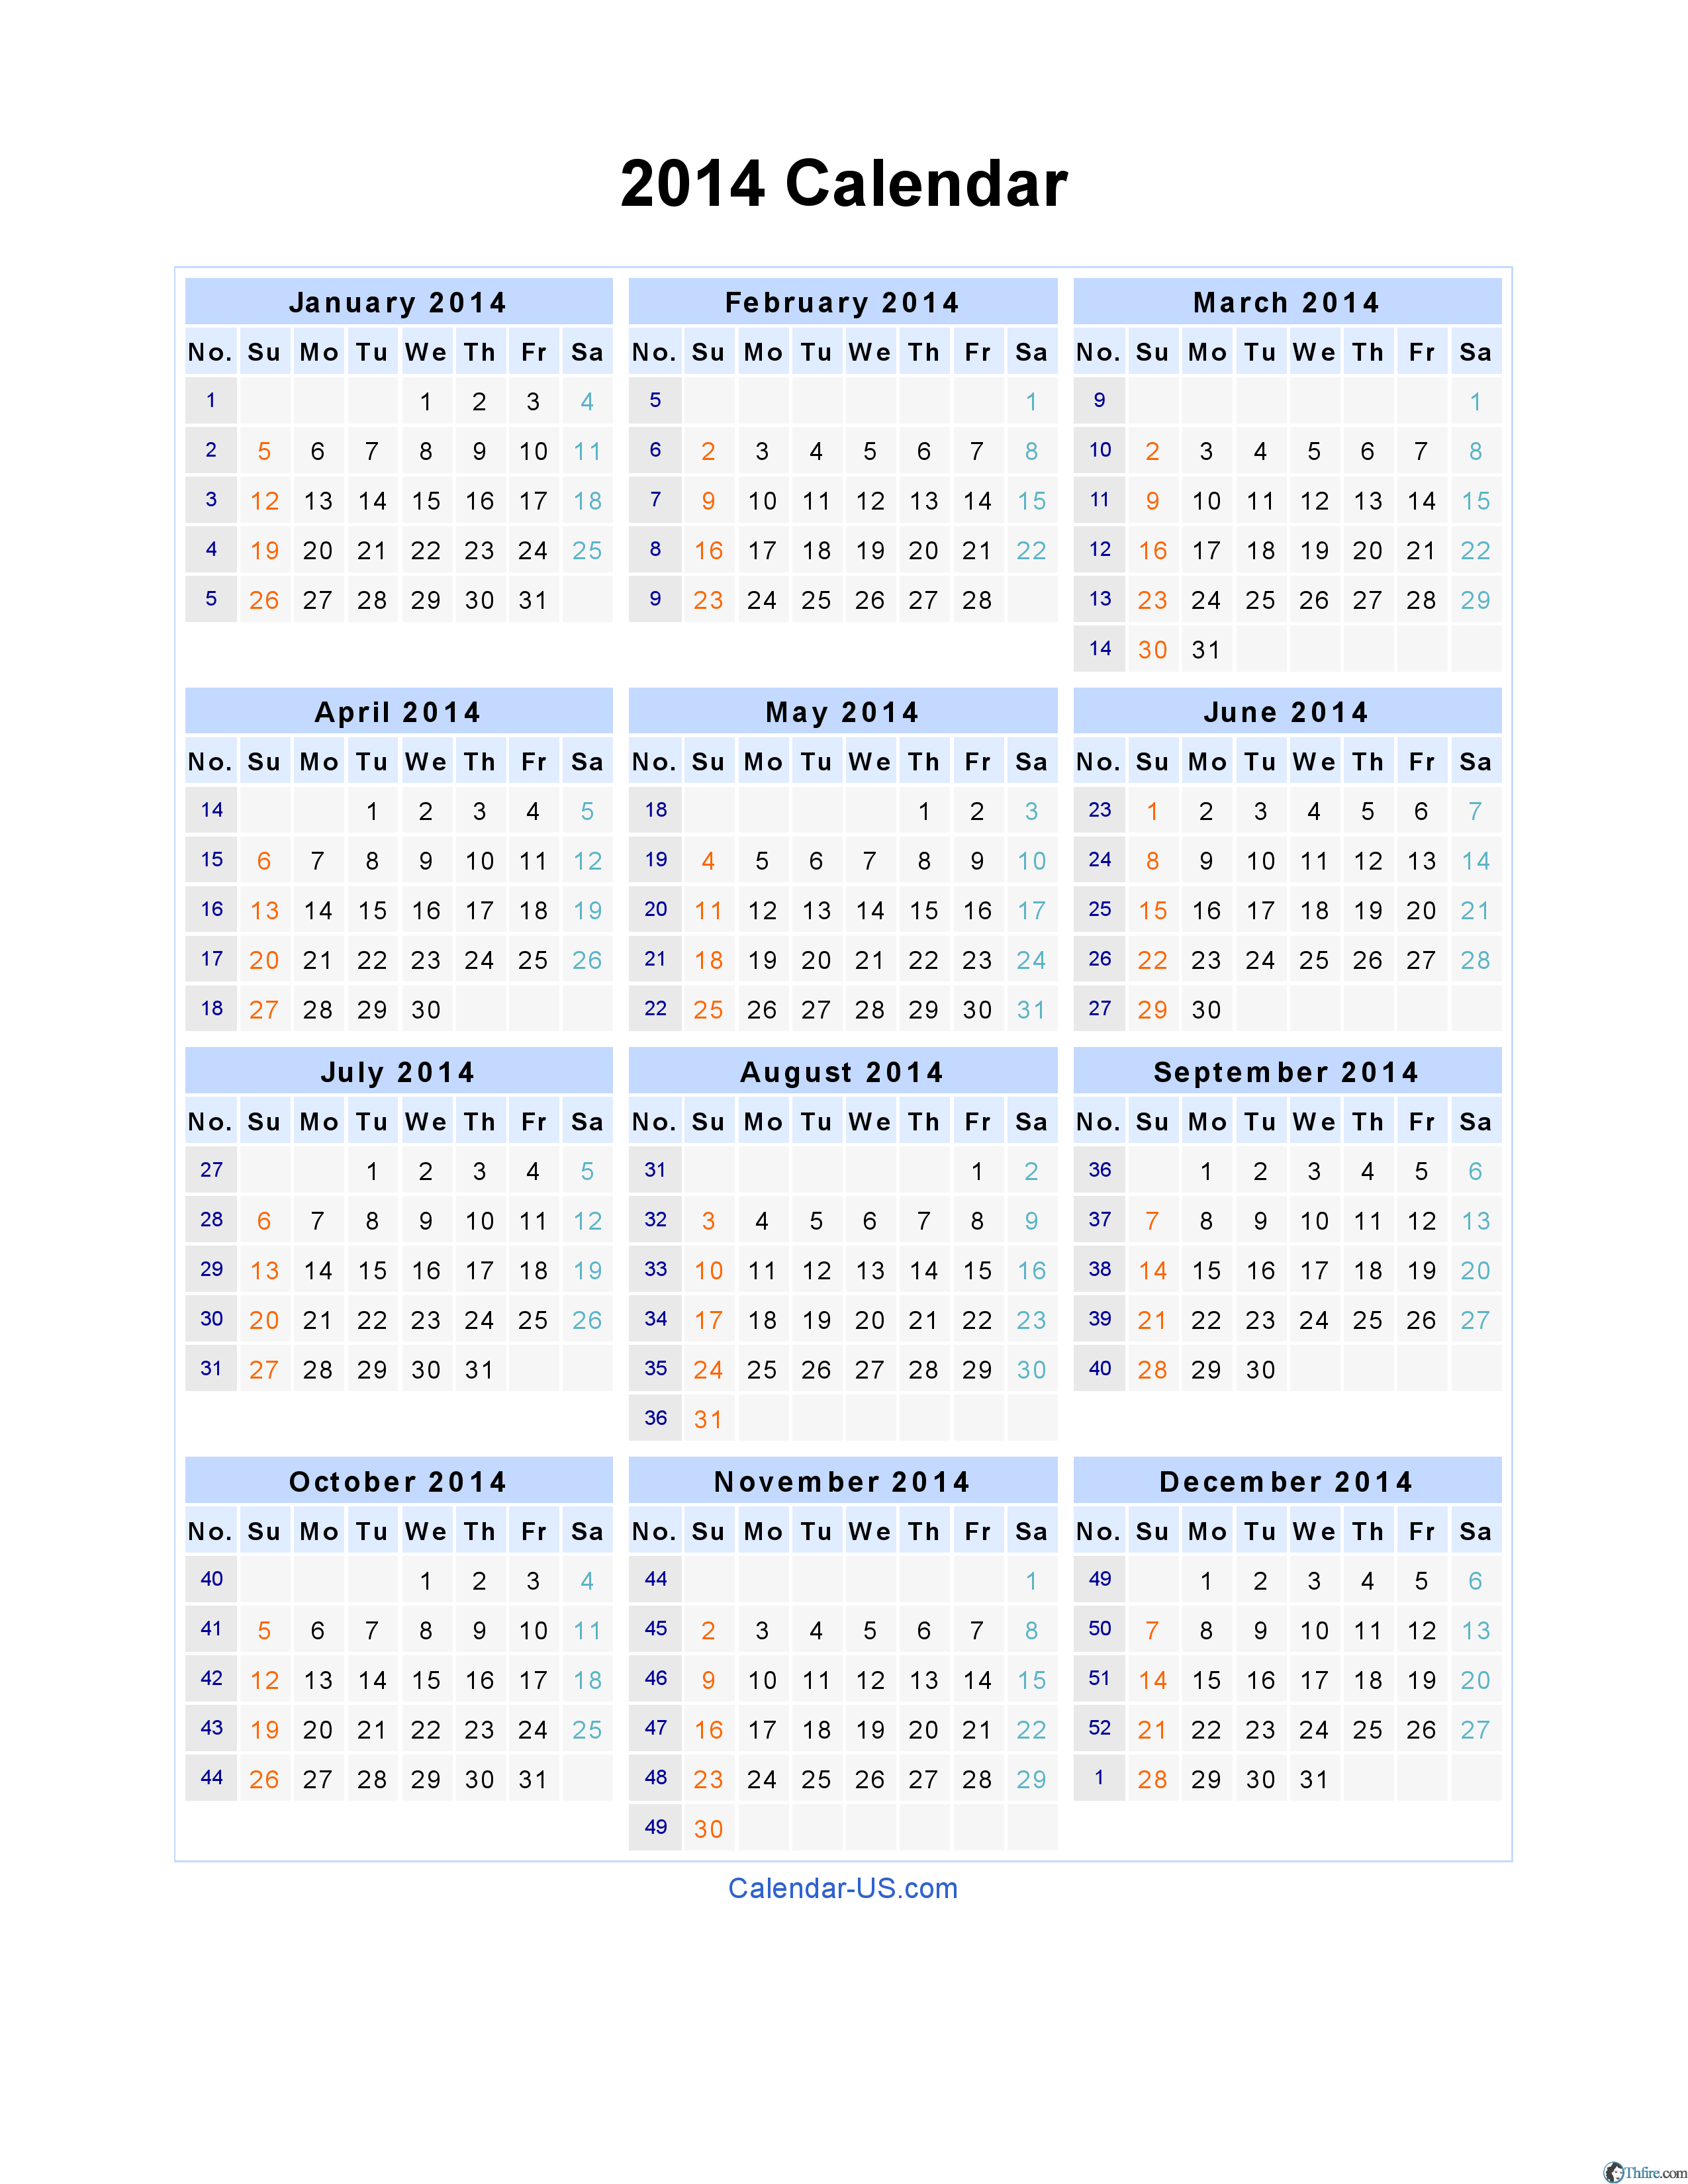 2014-Calendar